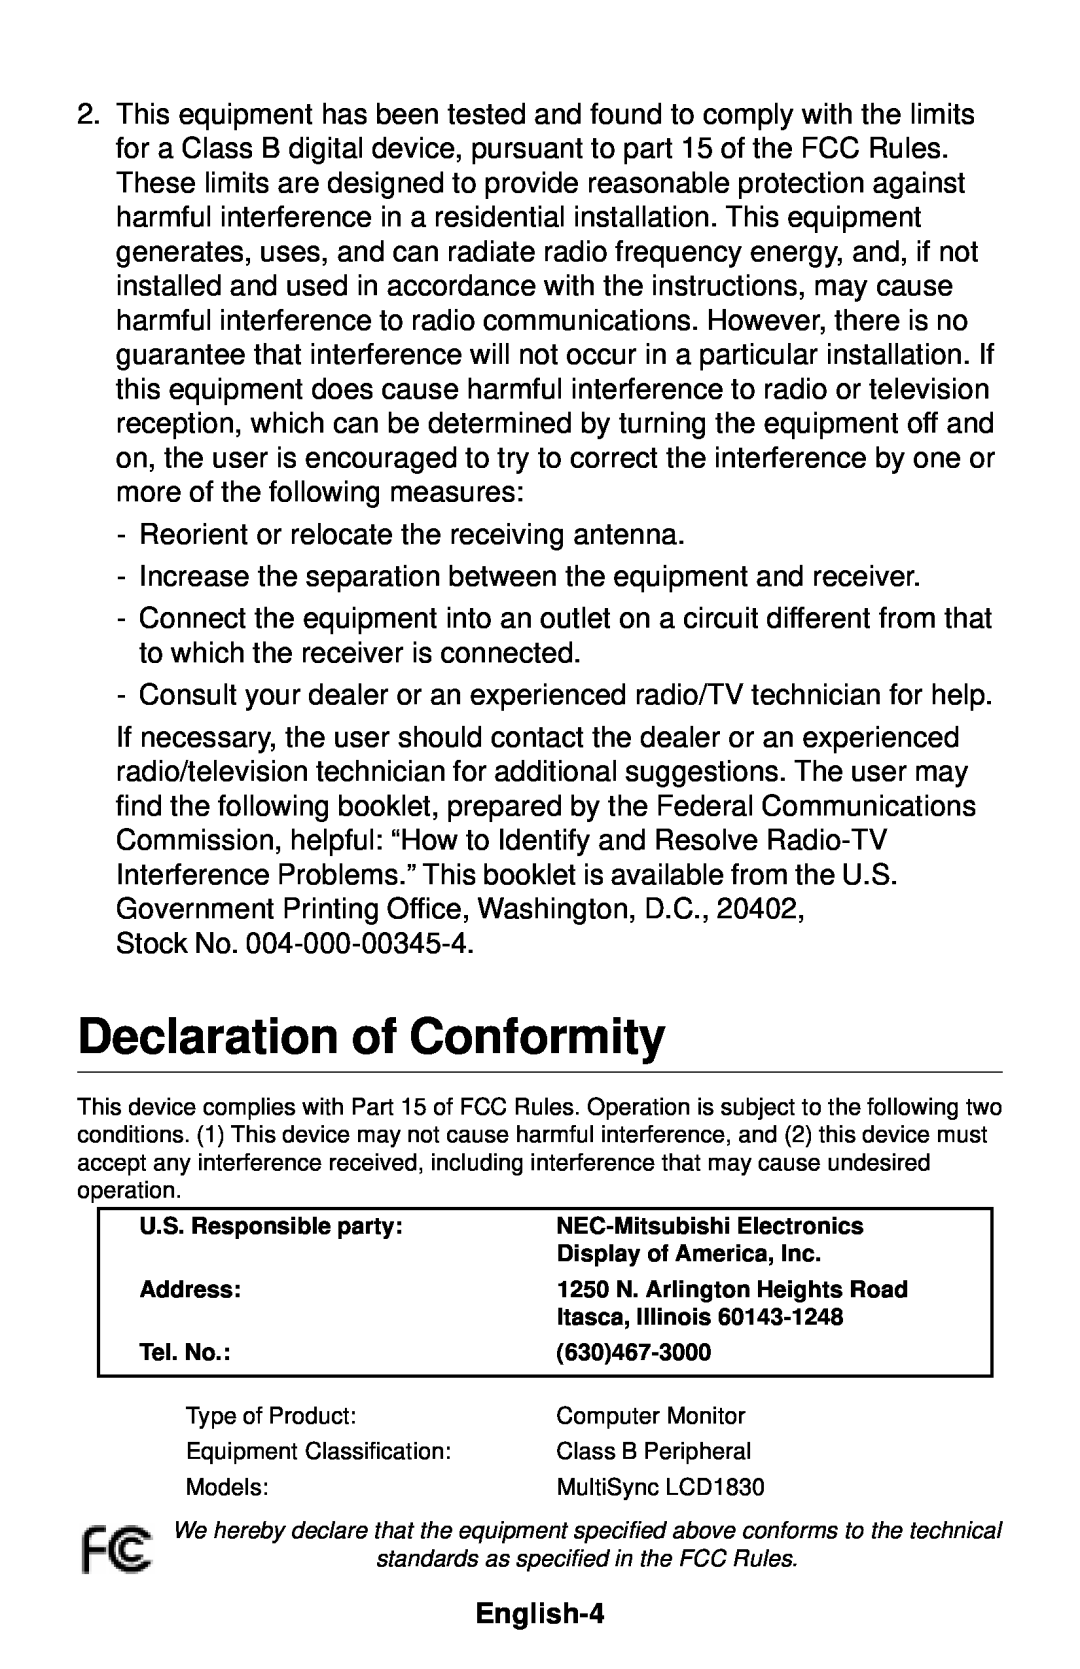 NEC LCD1830 user manual Declaration of Conformity, English-4 